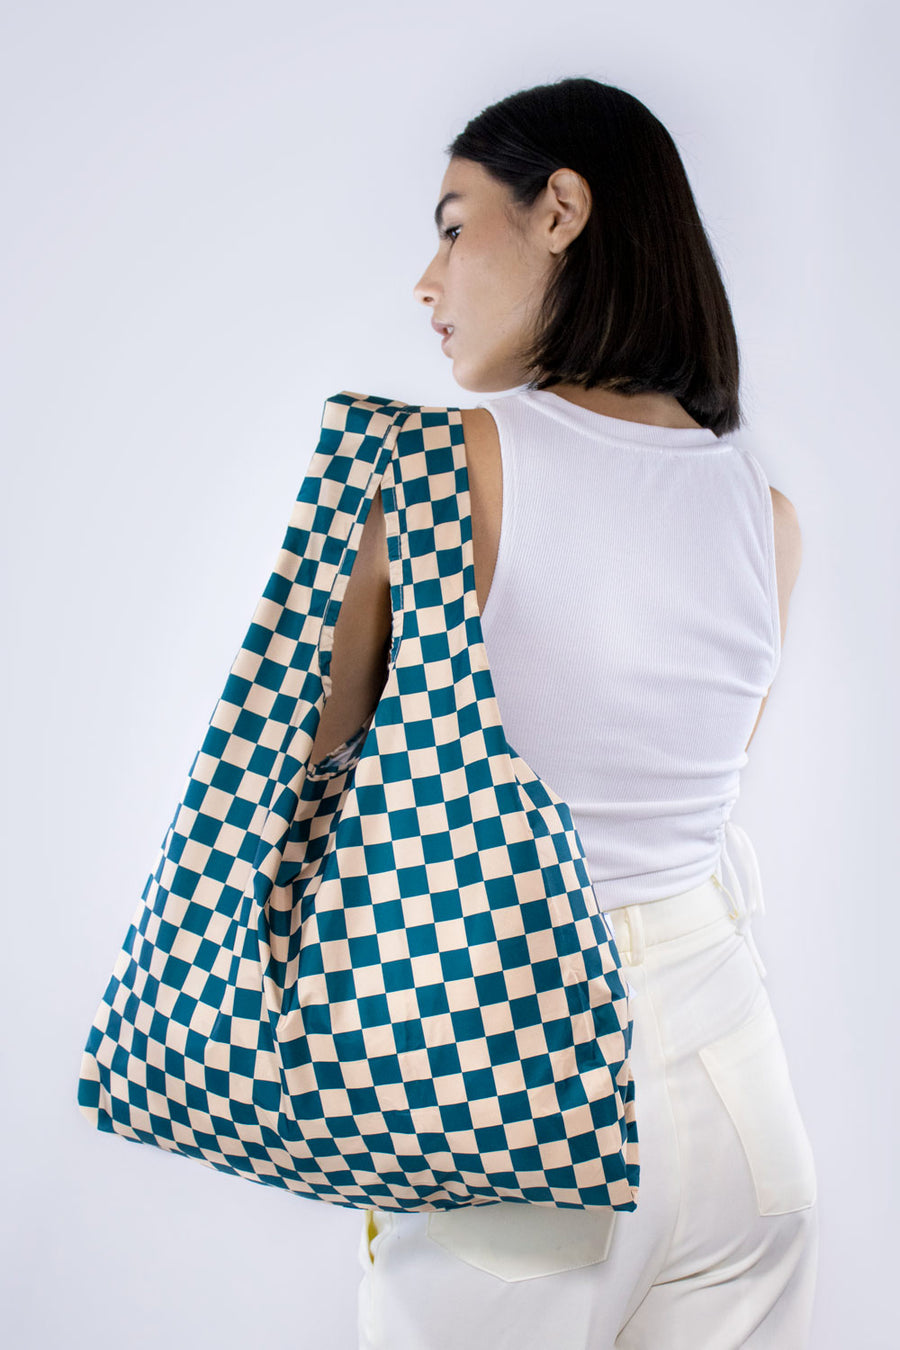 Kind Bag Checkerboard Teal Beige Medium Reusable Bag